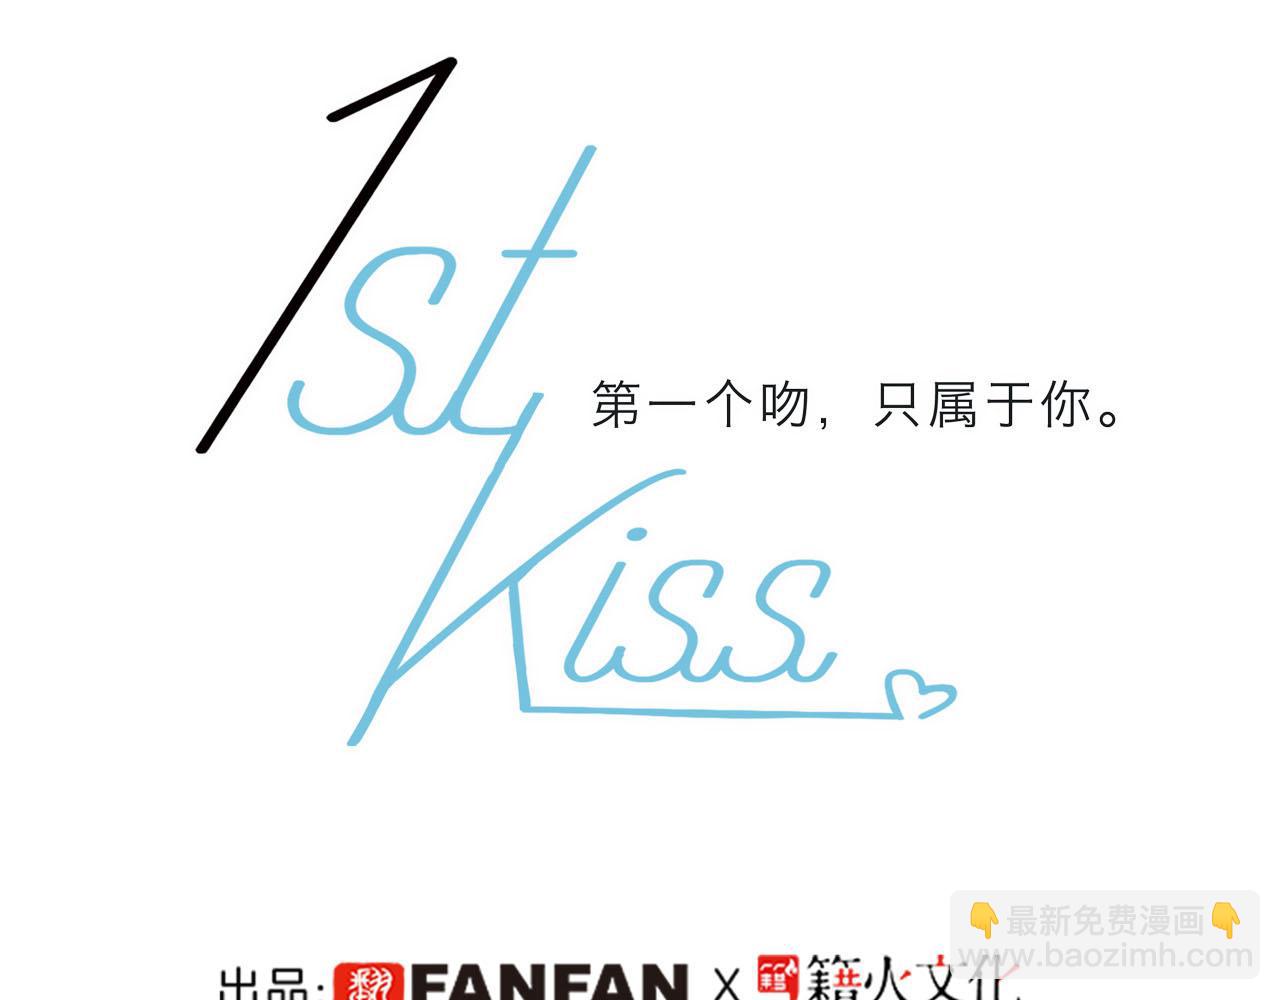 1st Kiss - 51：意外驚喜(1/3) - 6